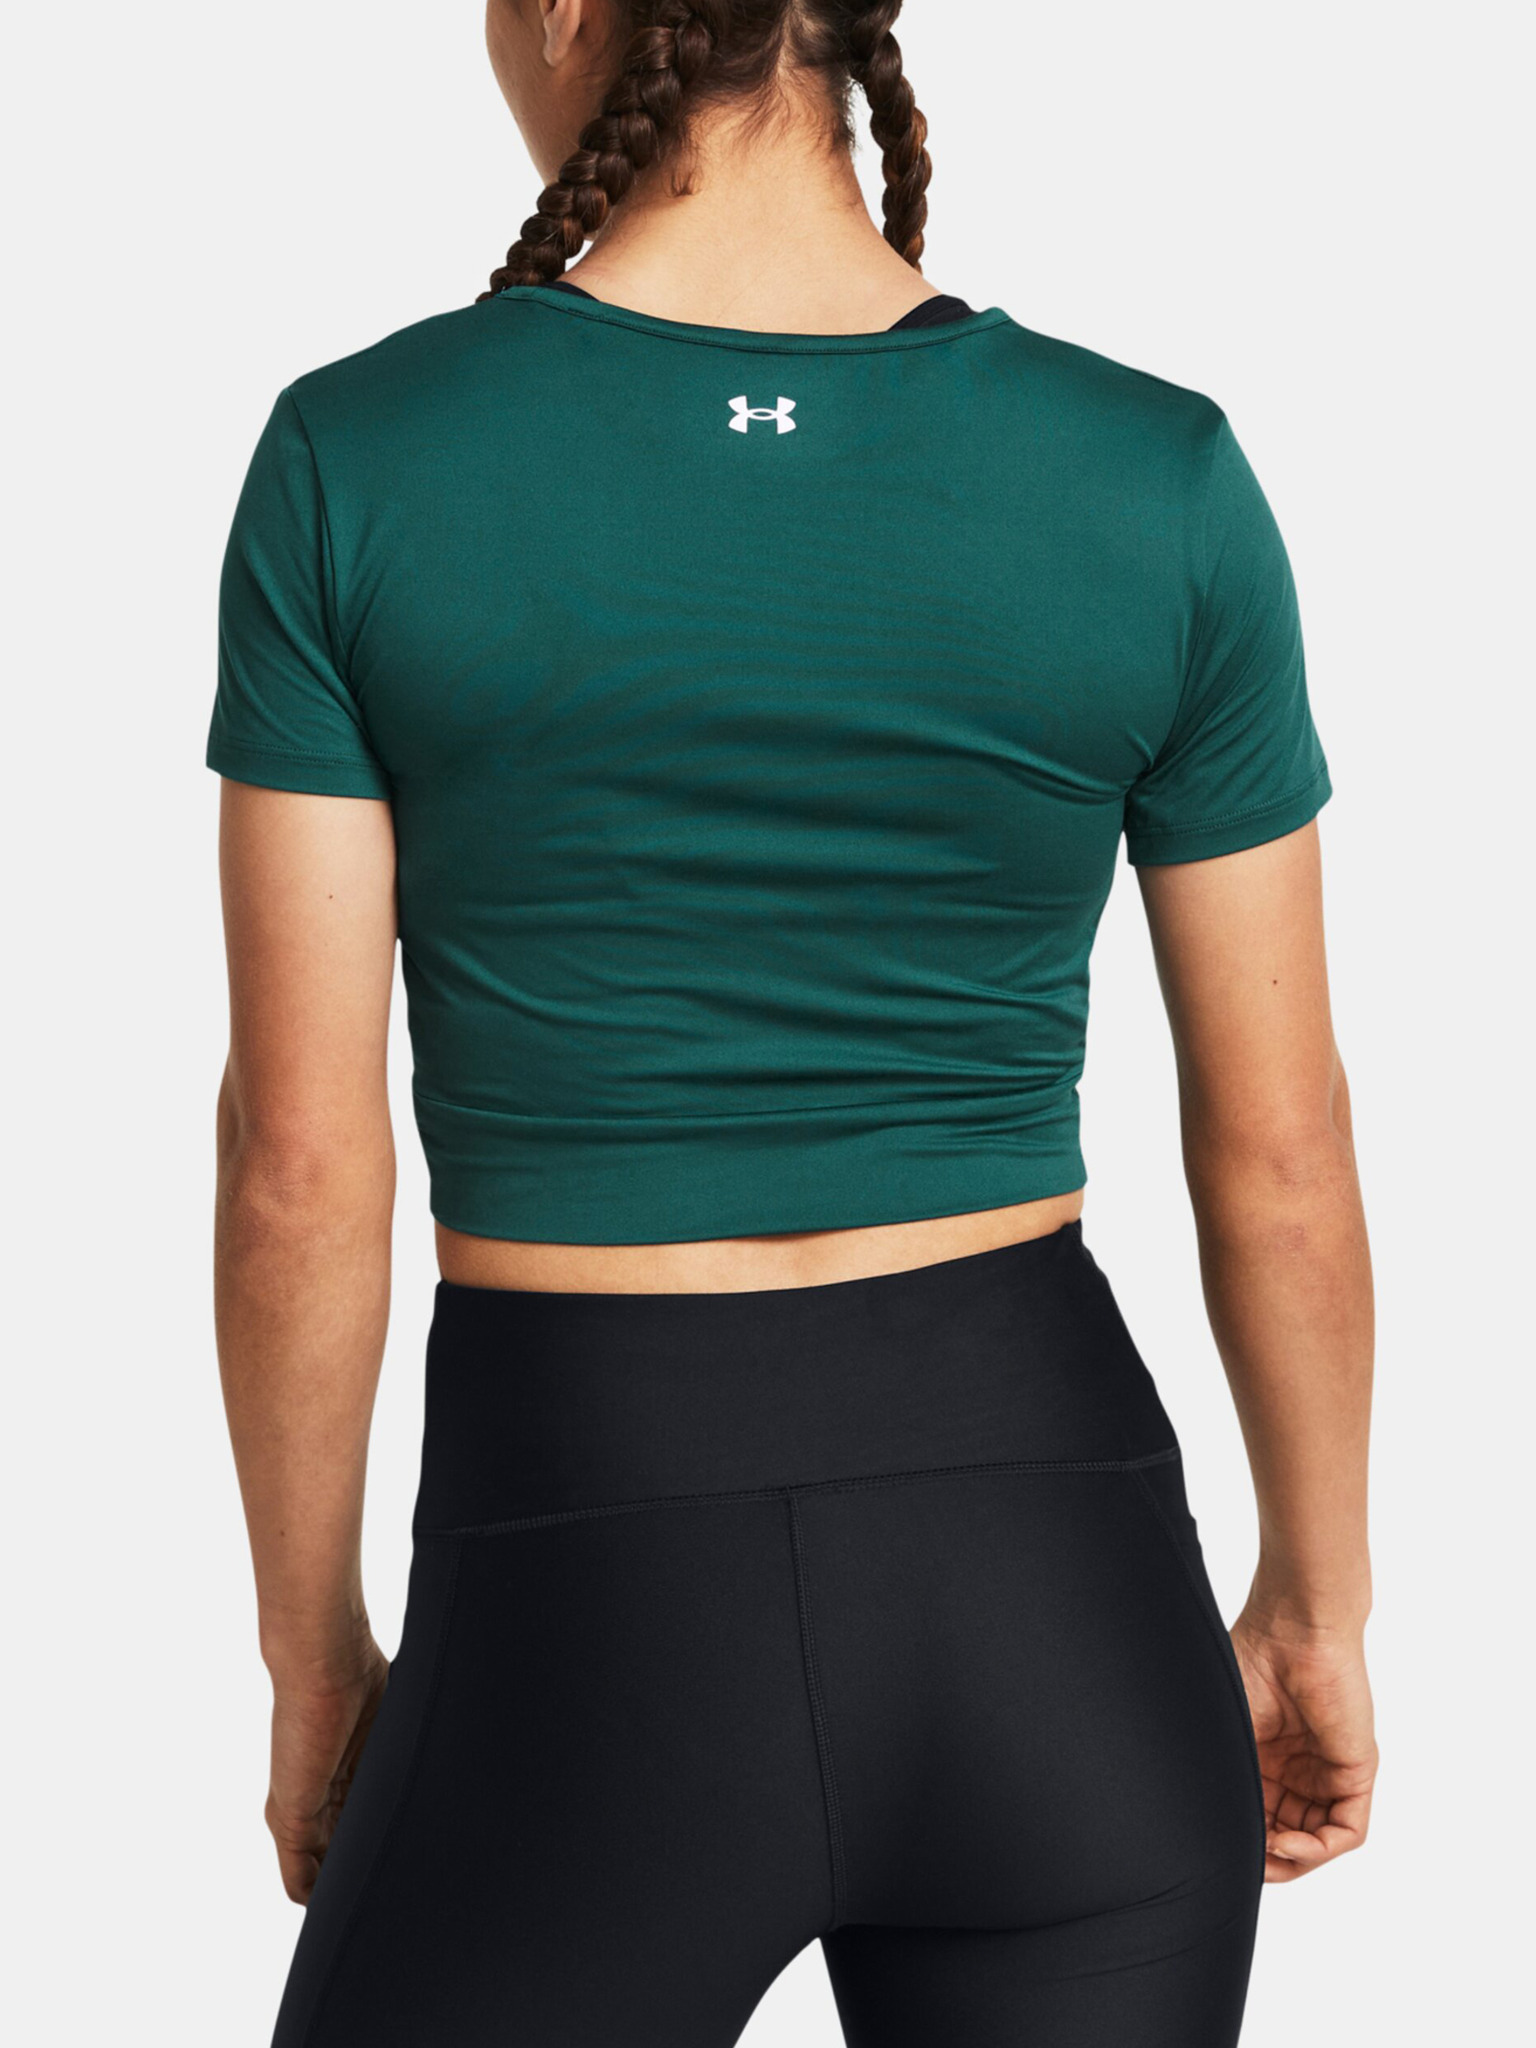  Meridian SS, green - T-shirt short sleeve ladies - UNDER  ARMOUR - 44.18 € - outdoorové oblečení a vybavení shop